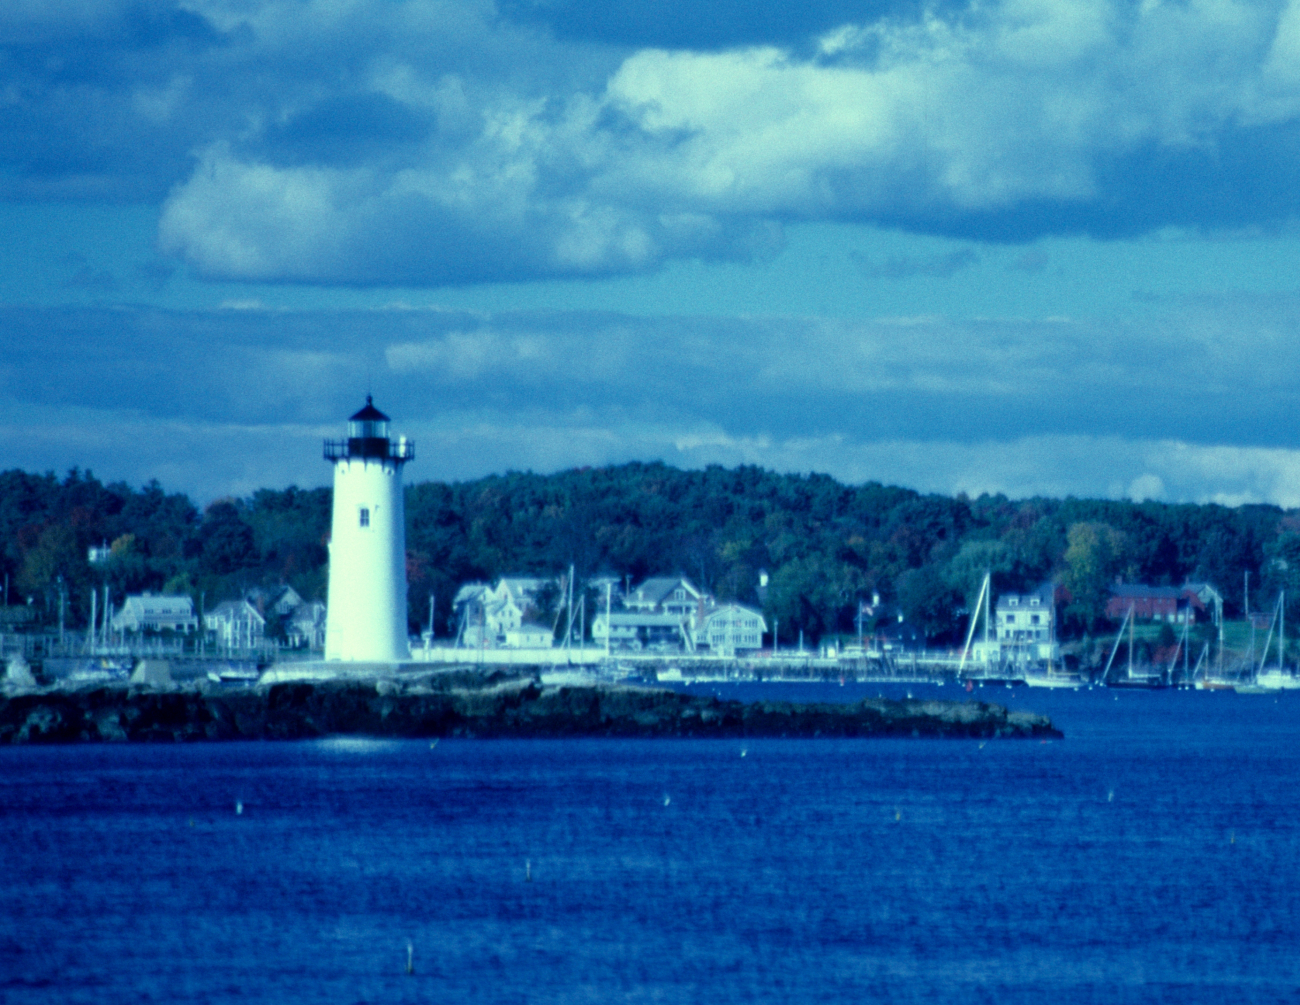 Portsmouth Harbor Lighthouse